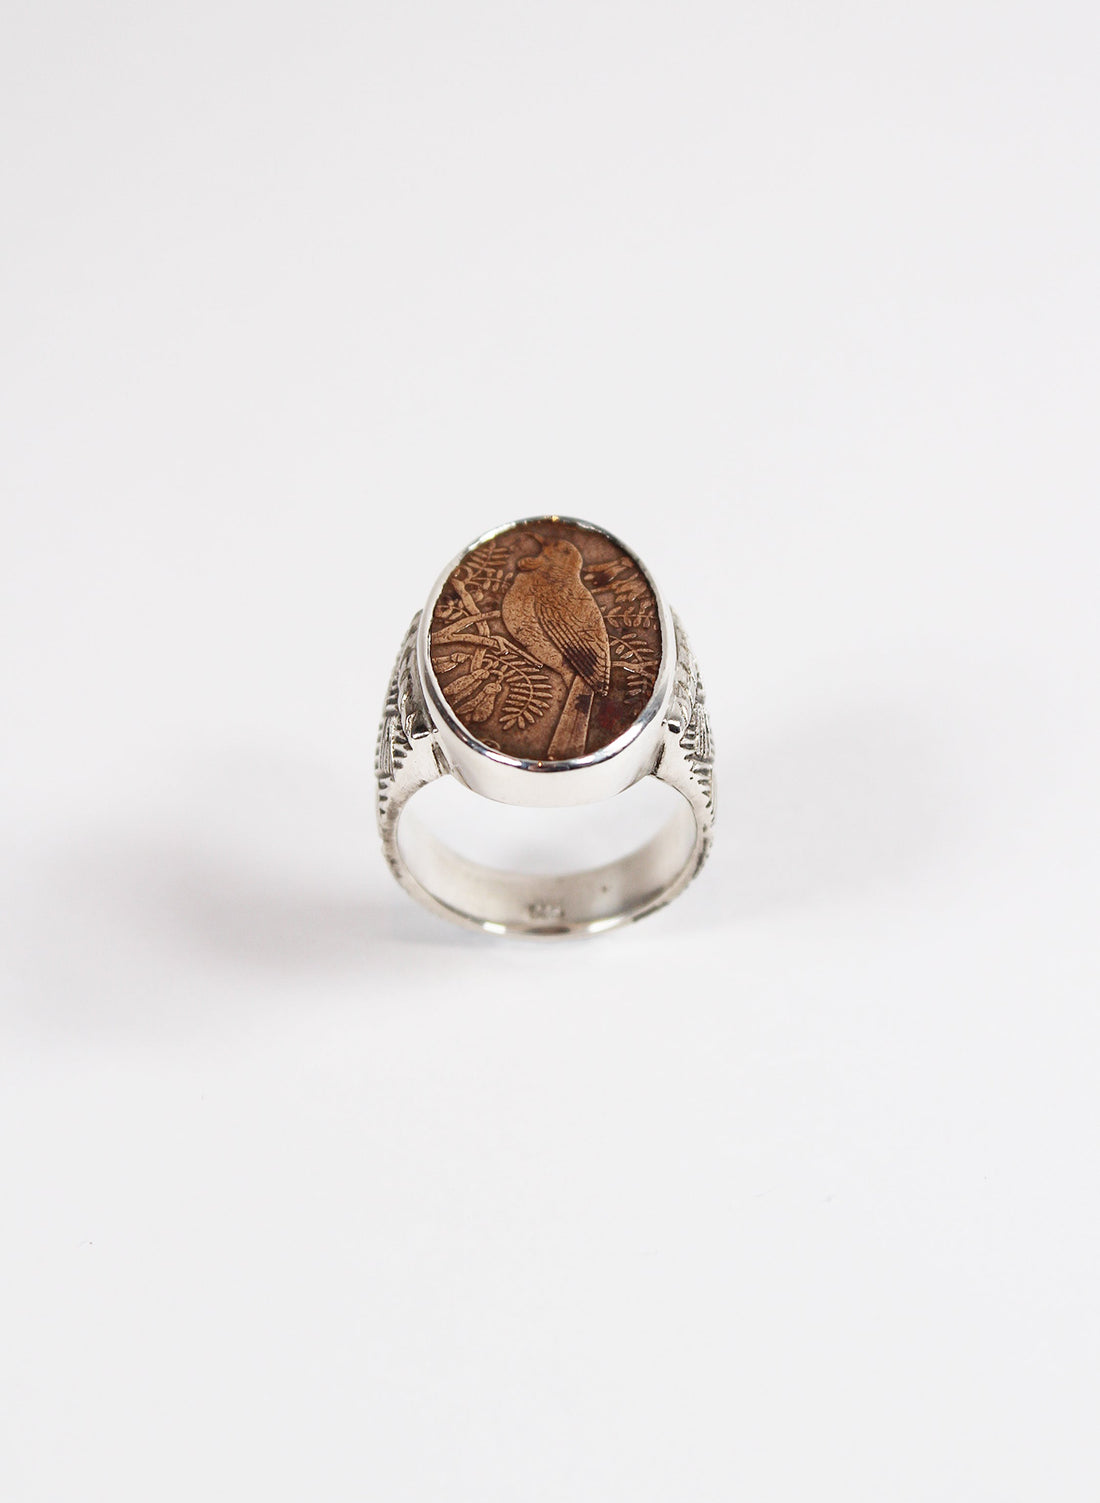 Oval Tūī Penny Signet Ring - Sterling Silver &amp; Bronze